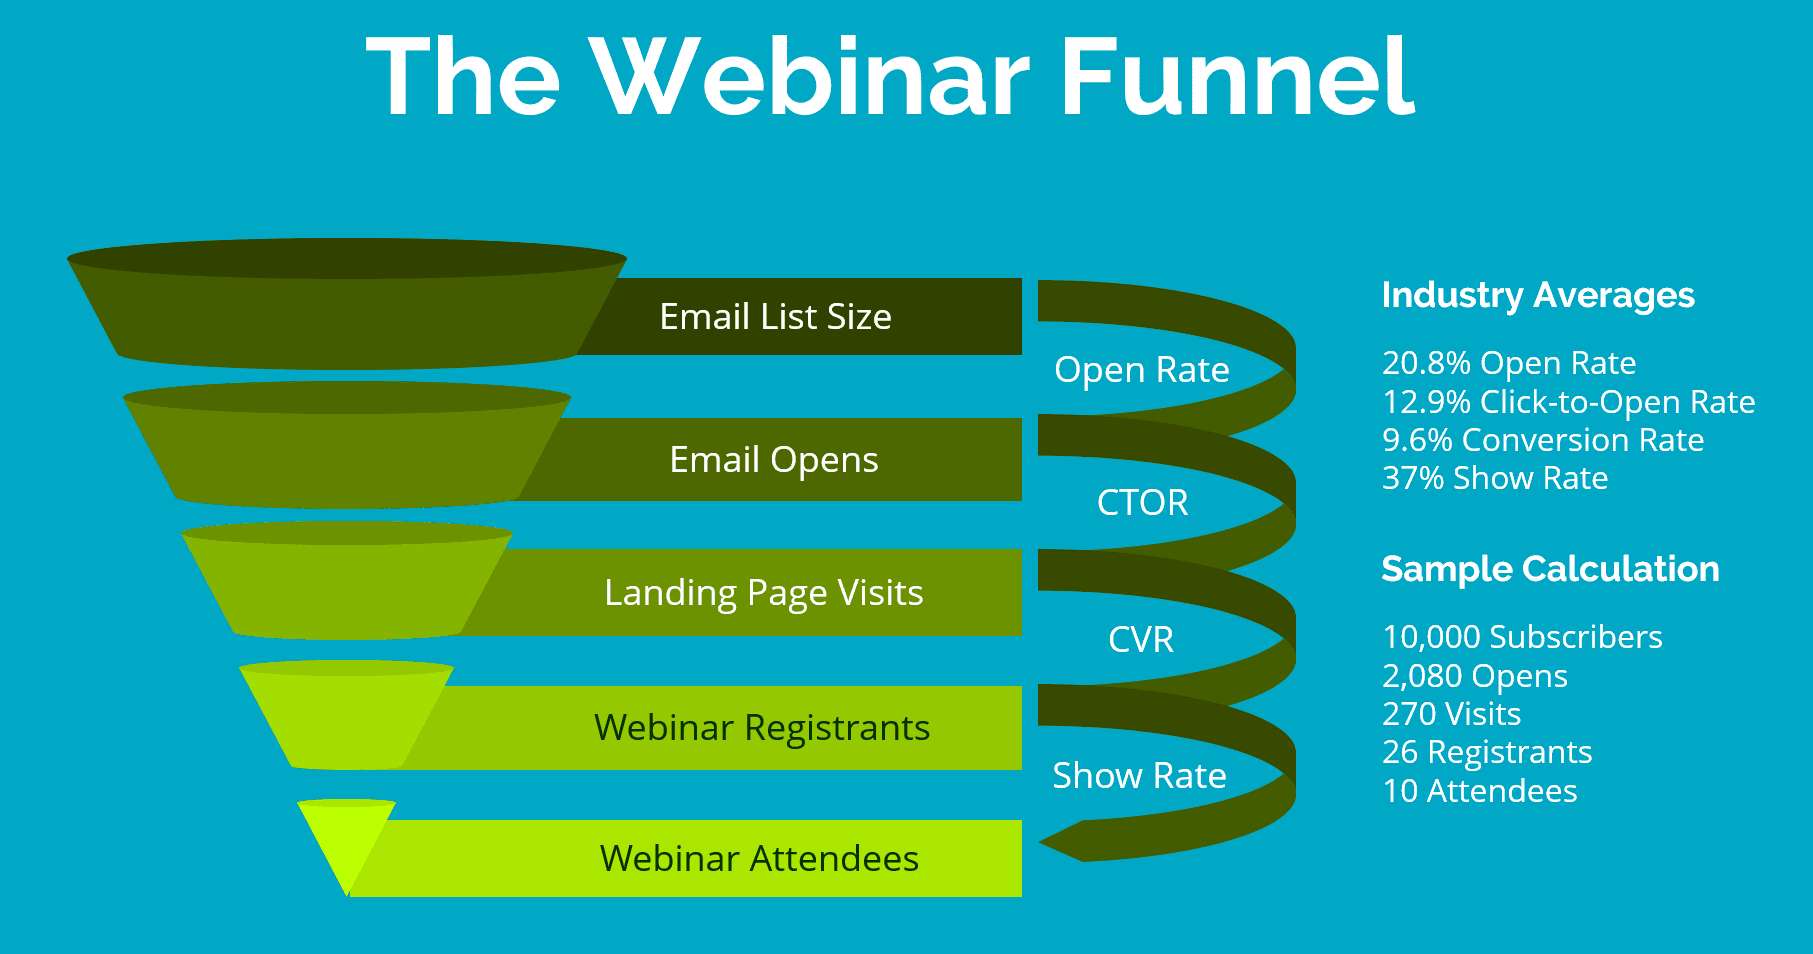 Metrics of the typical webinar funnel